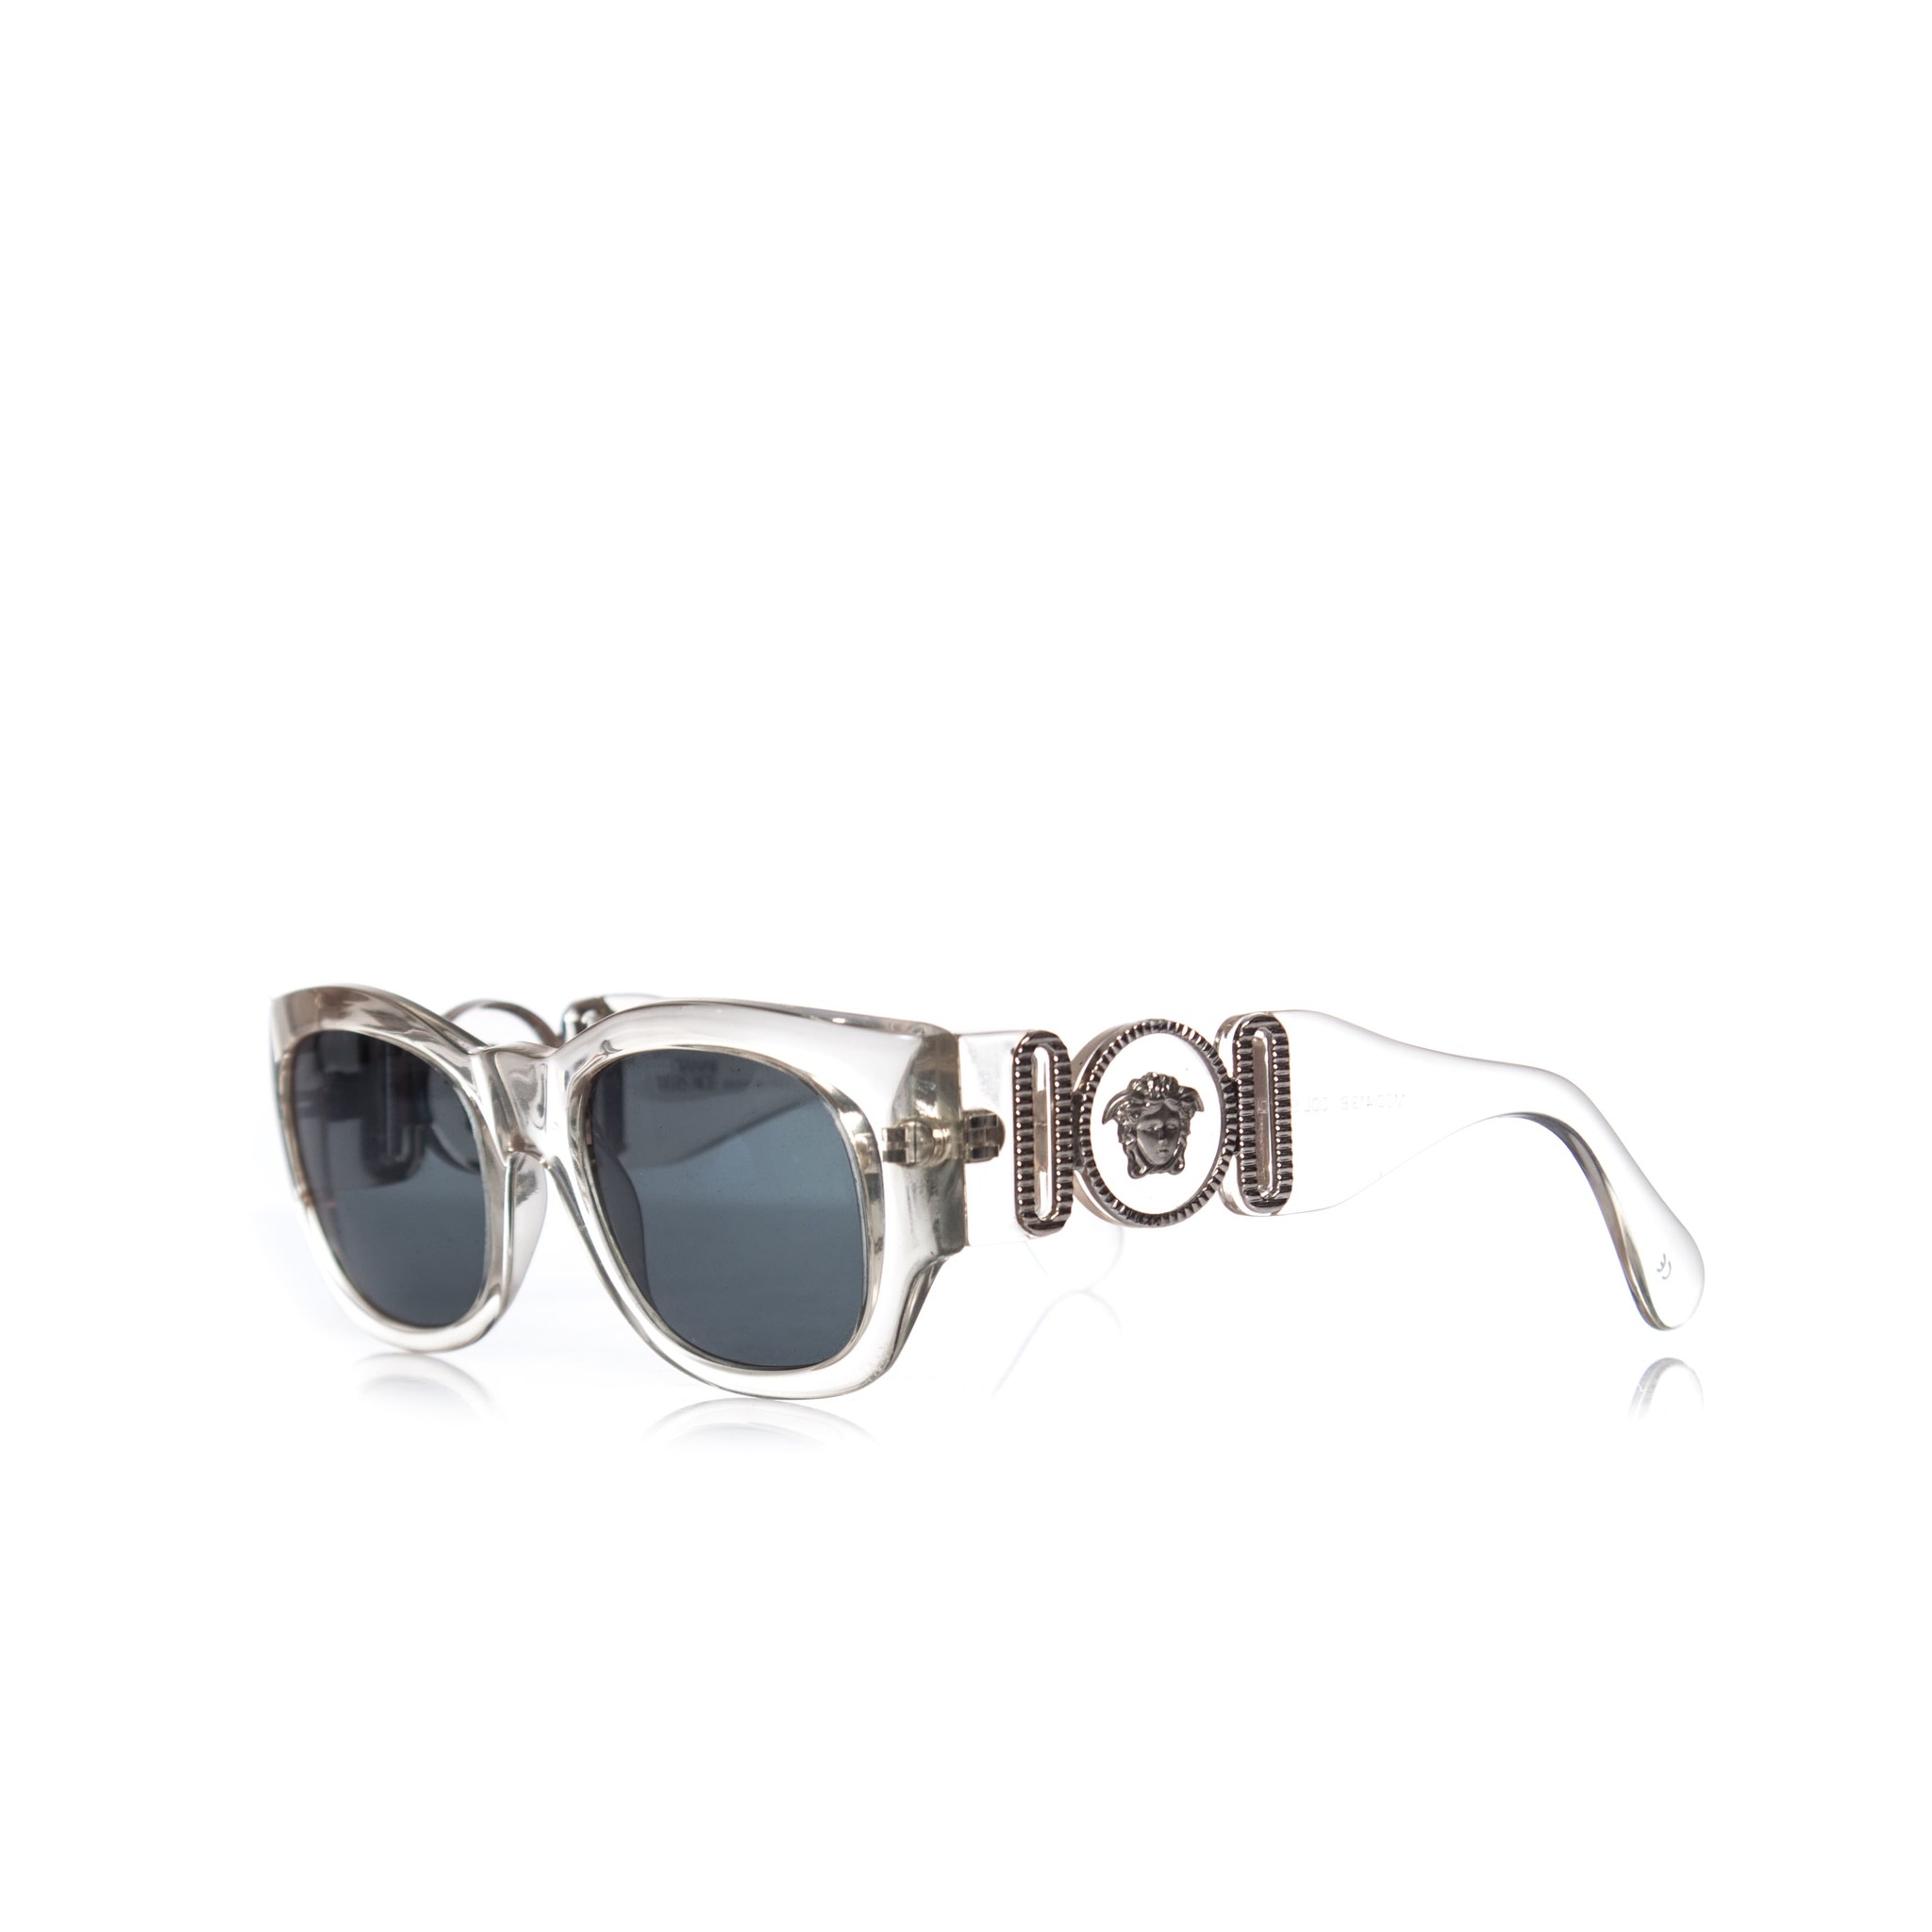 lading Socialistisch vitaliteit Gianni Versace, oversized clear sunglasses. - Unique Designer Pieces